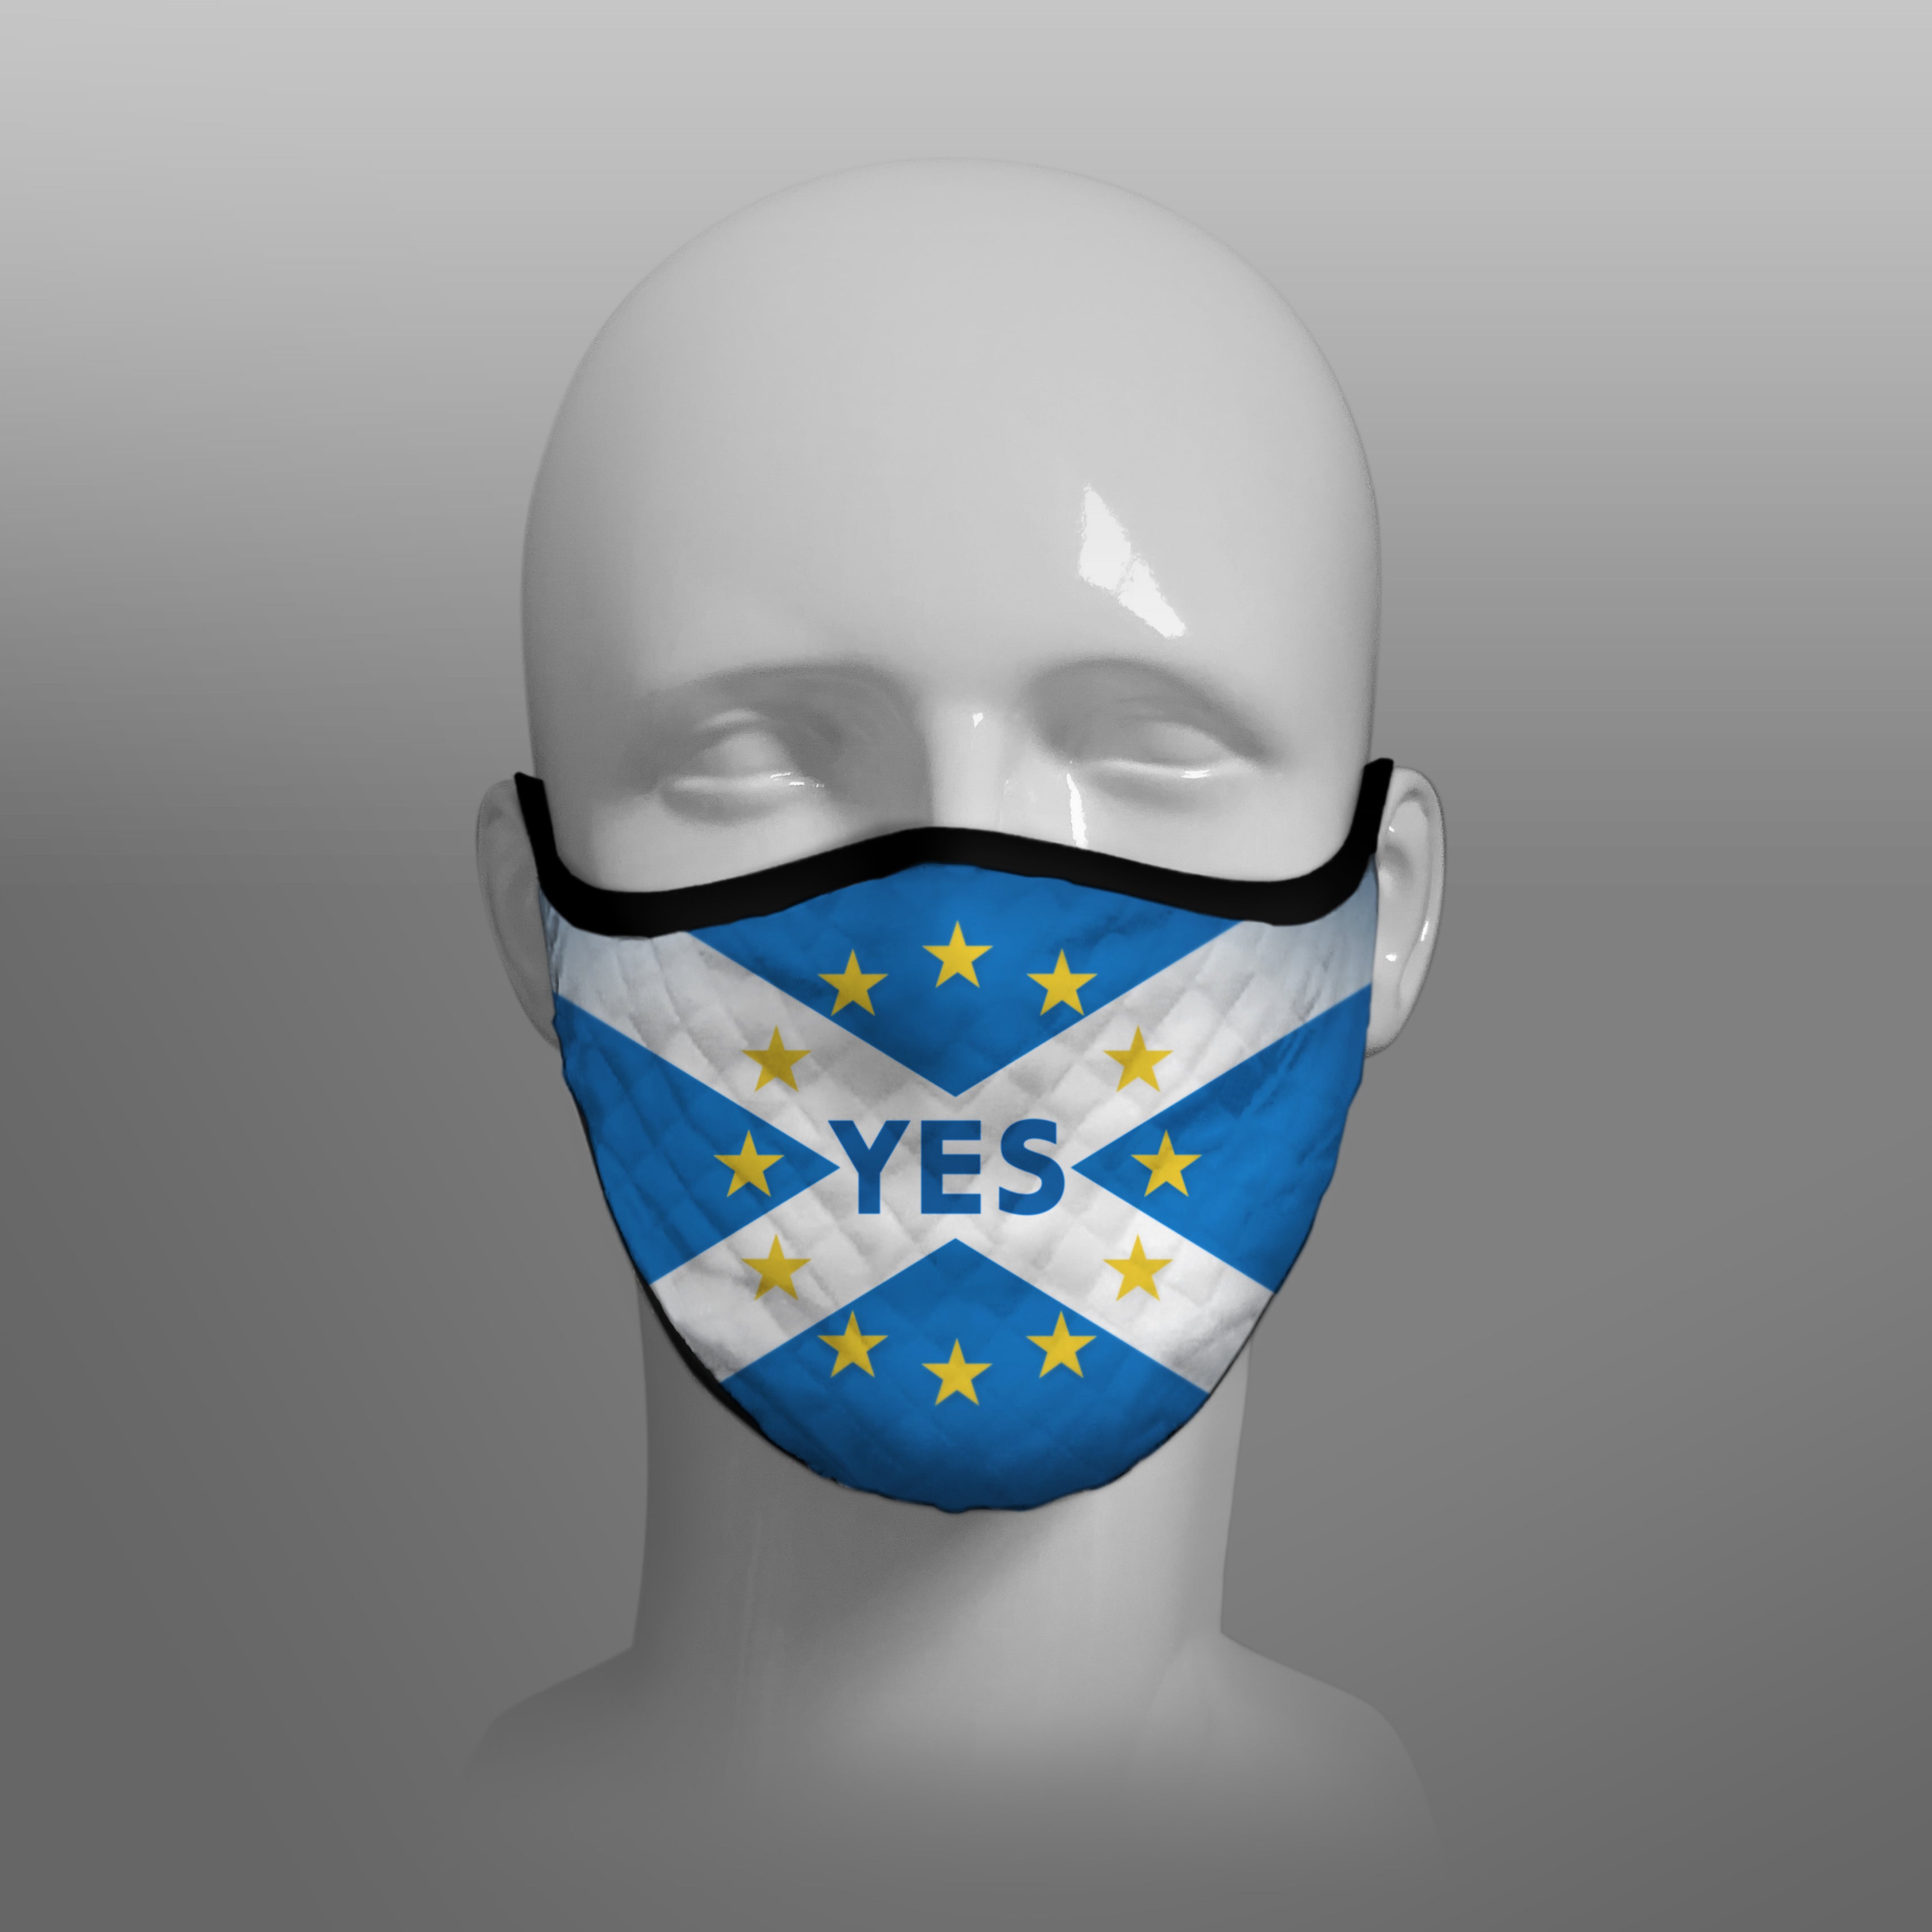 YES IT'S TIME - Alba Gu Brath - Pro EU - European Union - Nicola Sturgeon - Scottish Saltire face mask cloth covering - Nicola Sturgeon - by Steven Patrick Sim the Tartan Artisan - Stevie Tartan Guy - Scottish Independence